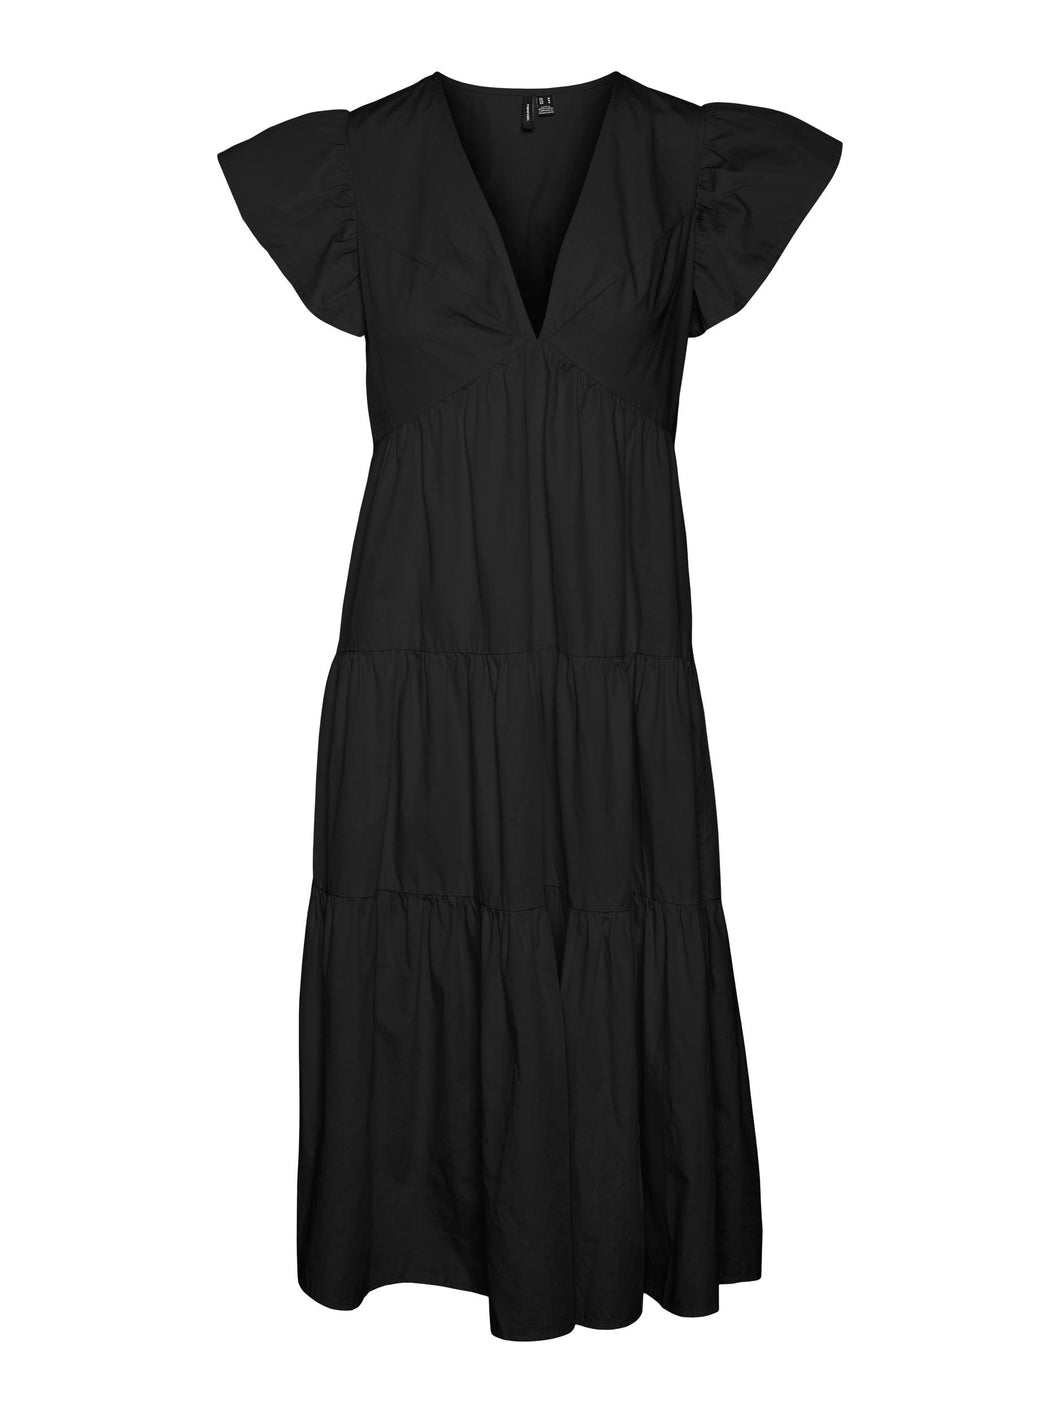 Vero Moda Jarlotte  Dress - Black